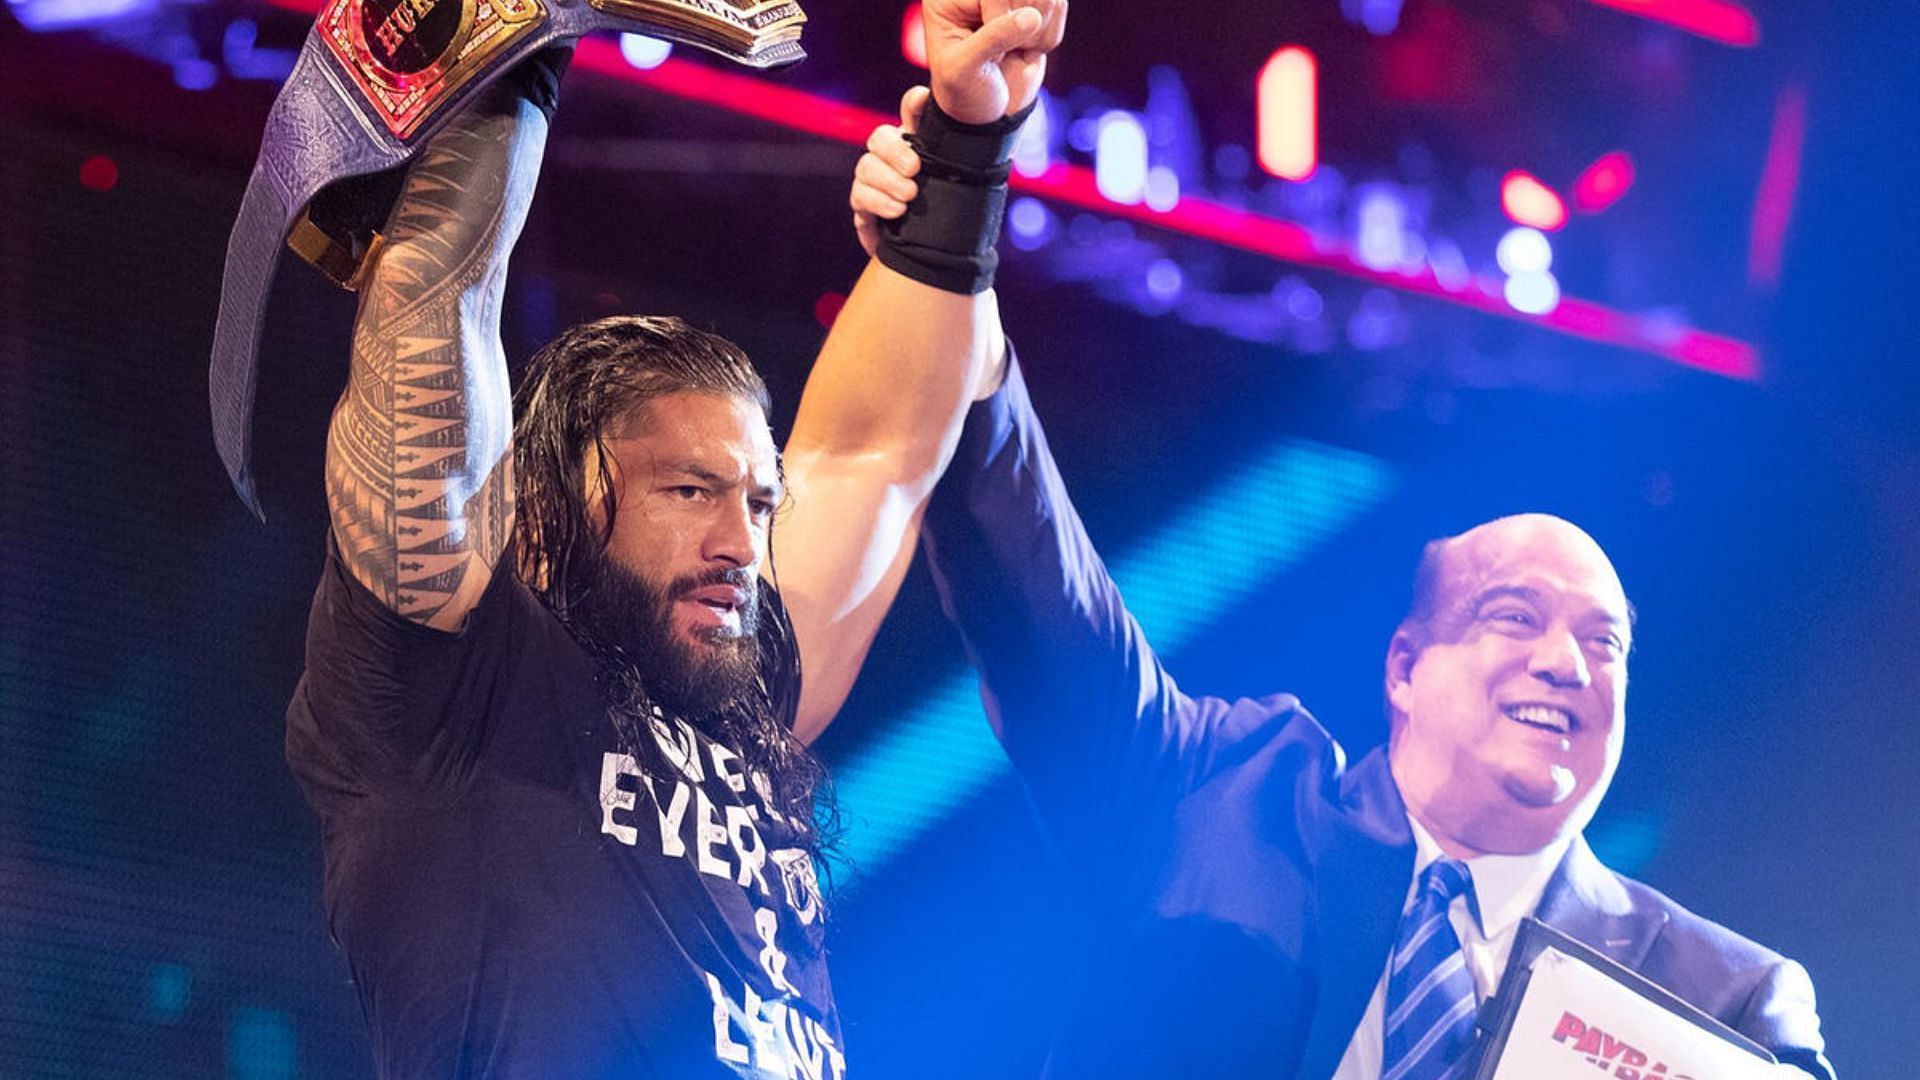 Roman Reigns won the WWE Universal Championship at Payback 2020